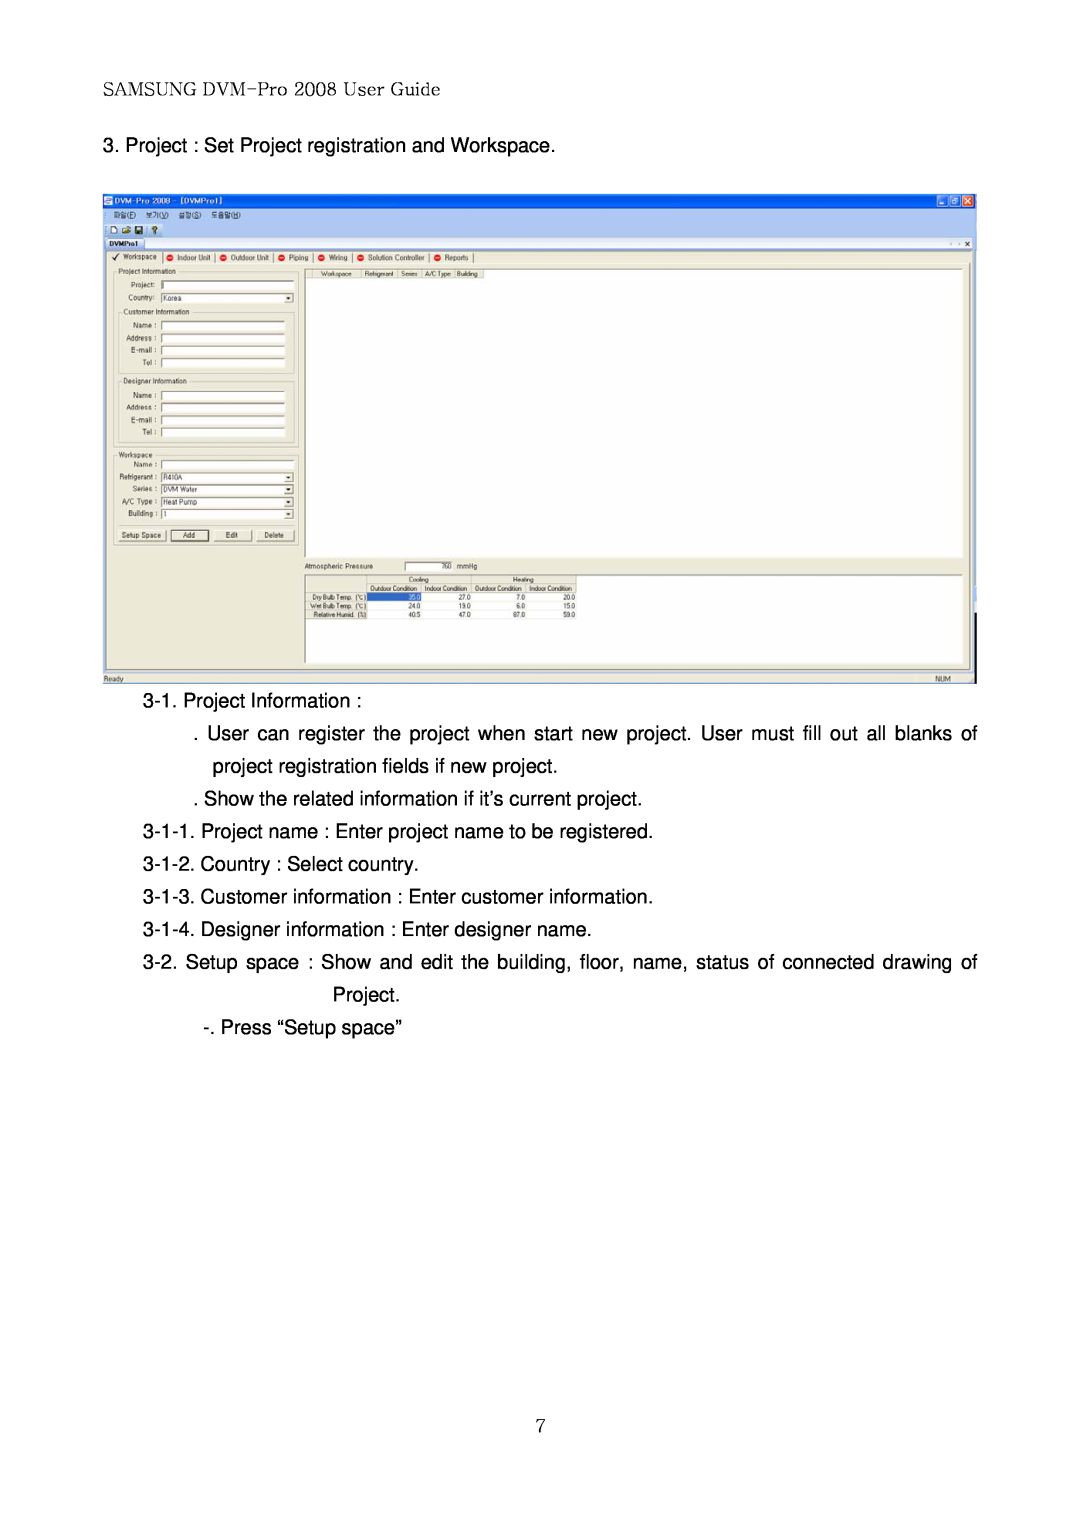 Samsung DVM-PRO 2008 user manual Project Information 